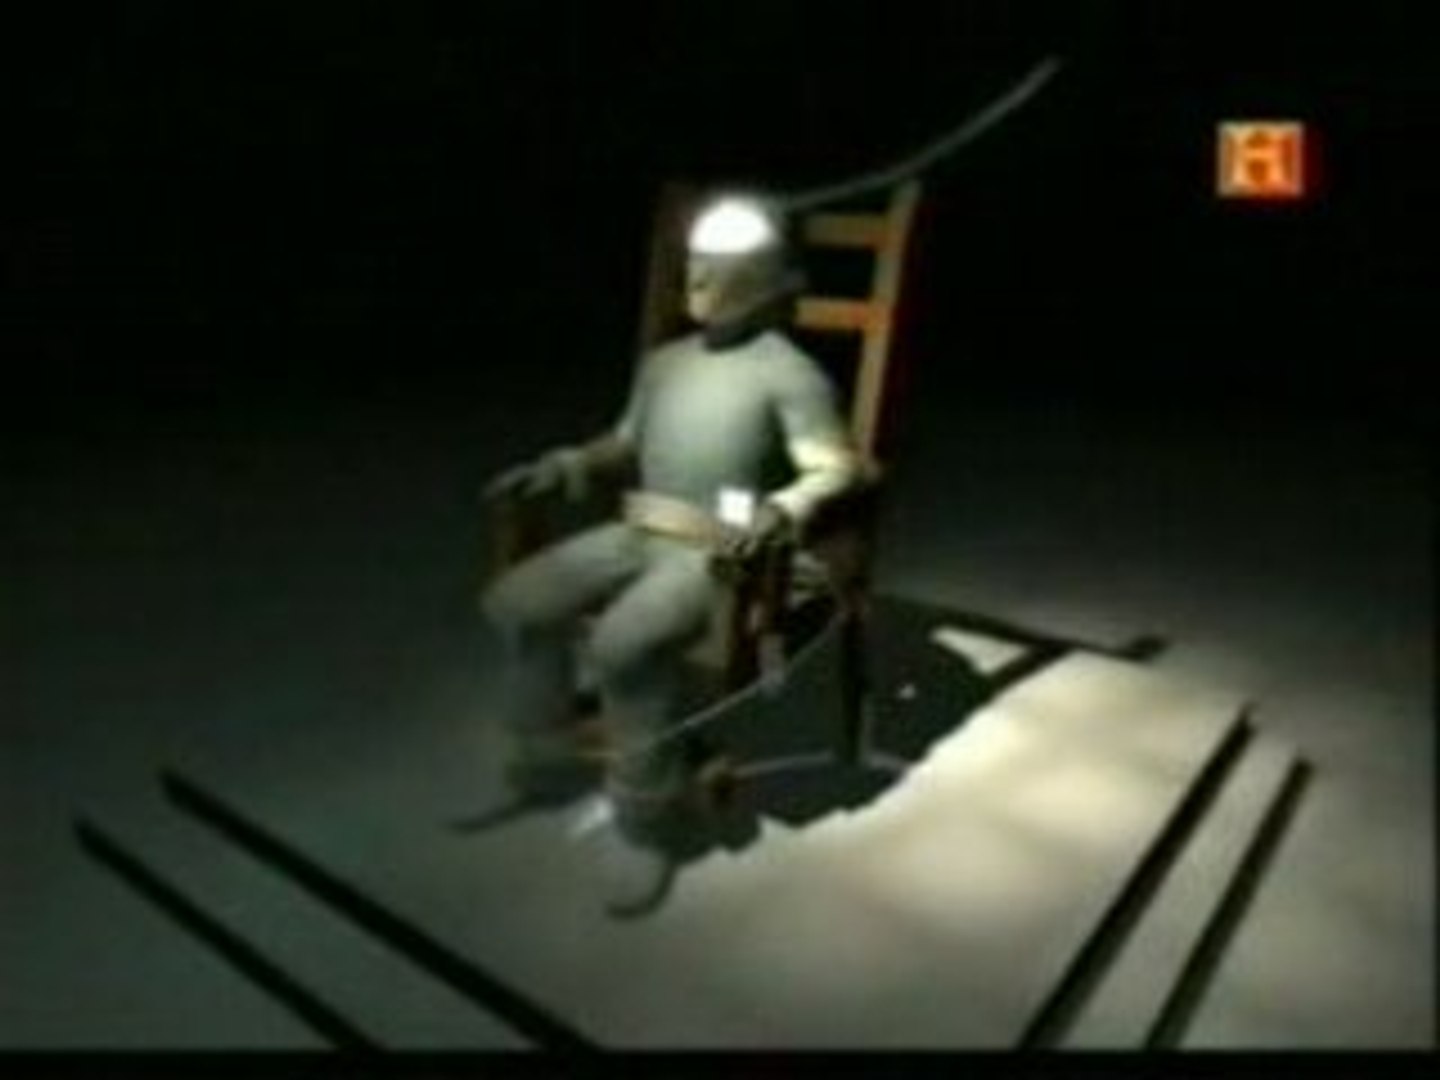 Muerte por silla electrica - Vídeo Dailymotion